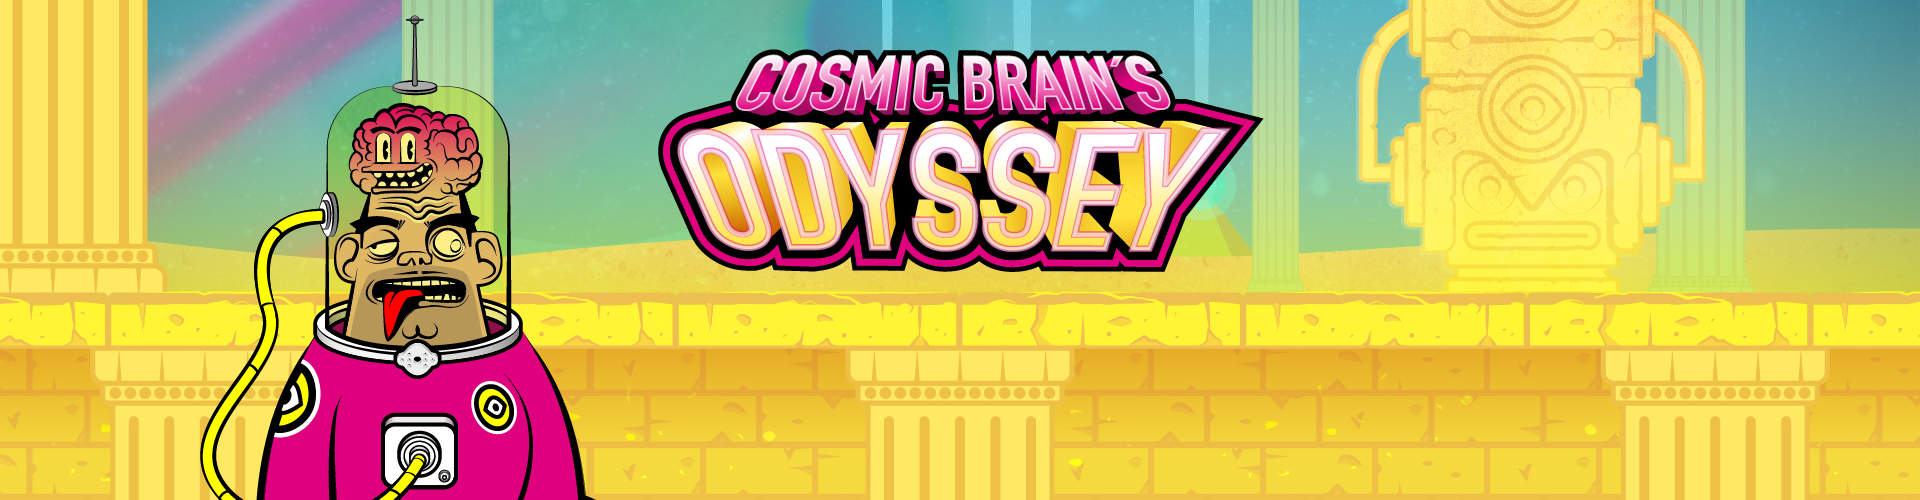 Cosmic Brain's Odyssey